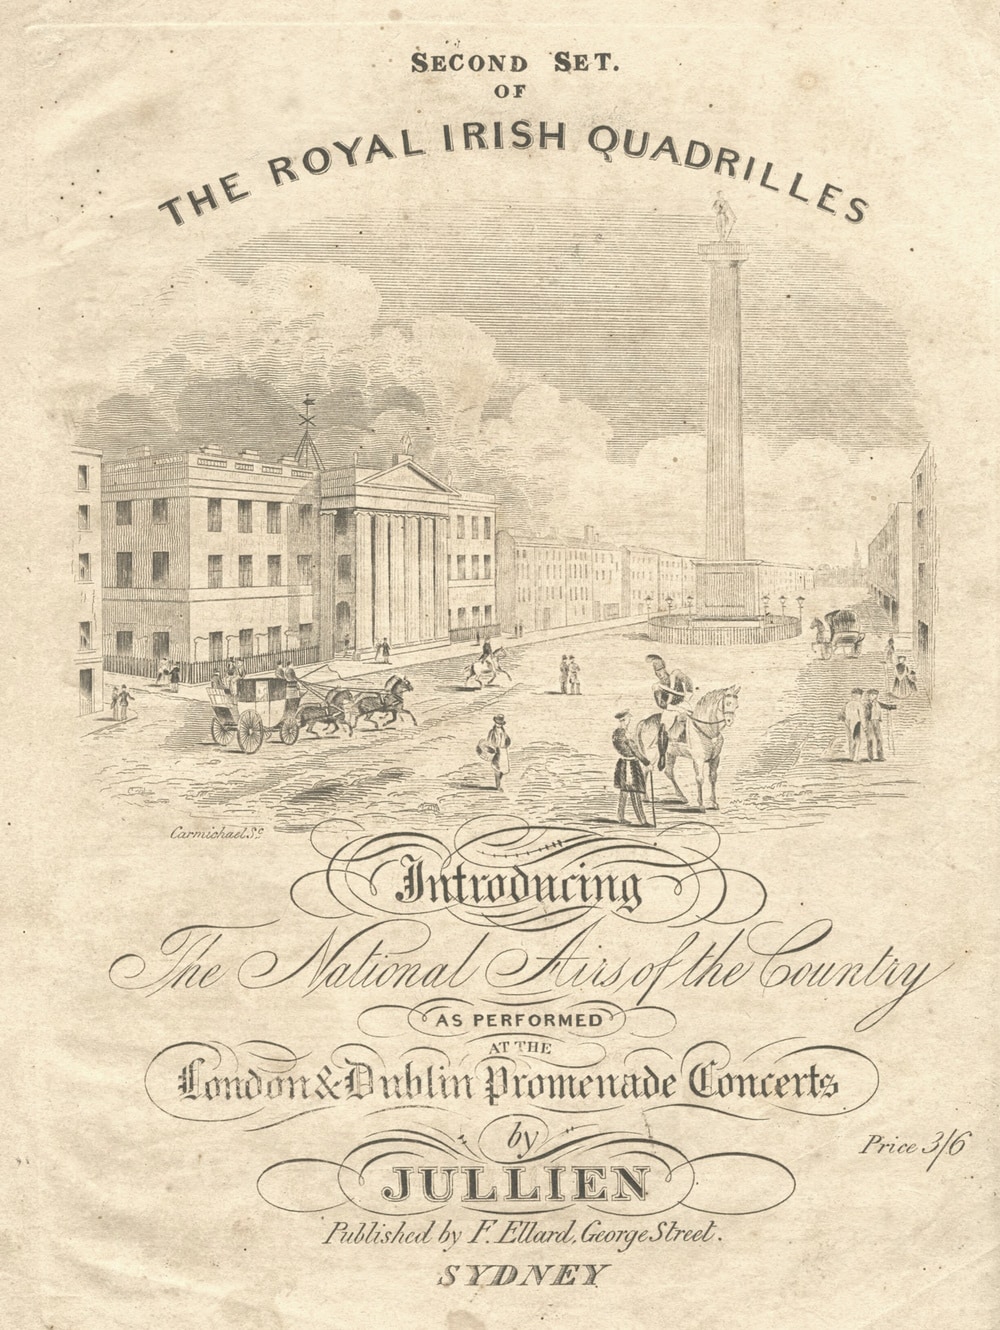 The second set of royal Irish quadrilles, cover engraving by John Carmichael (Sydney: Francis Ellard, [c. 1839-40])